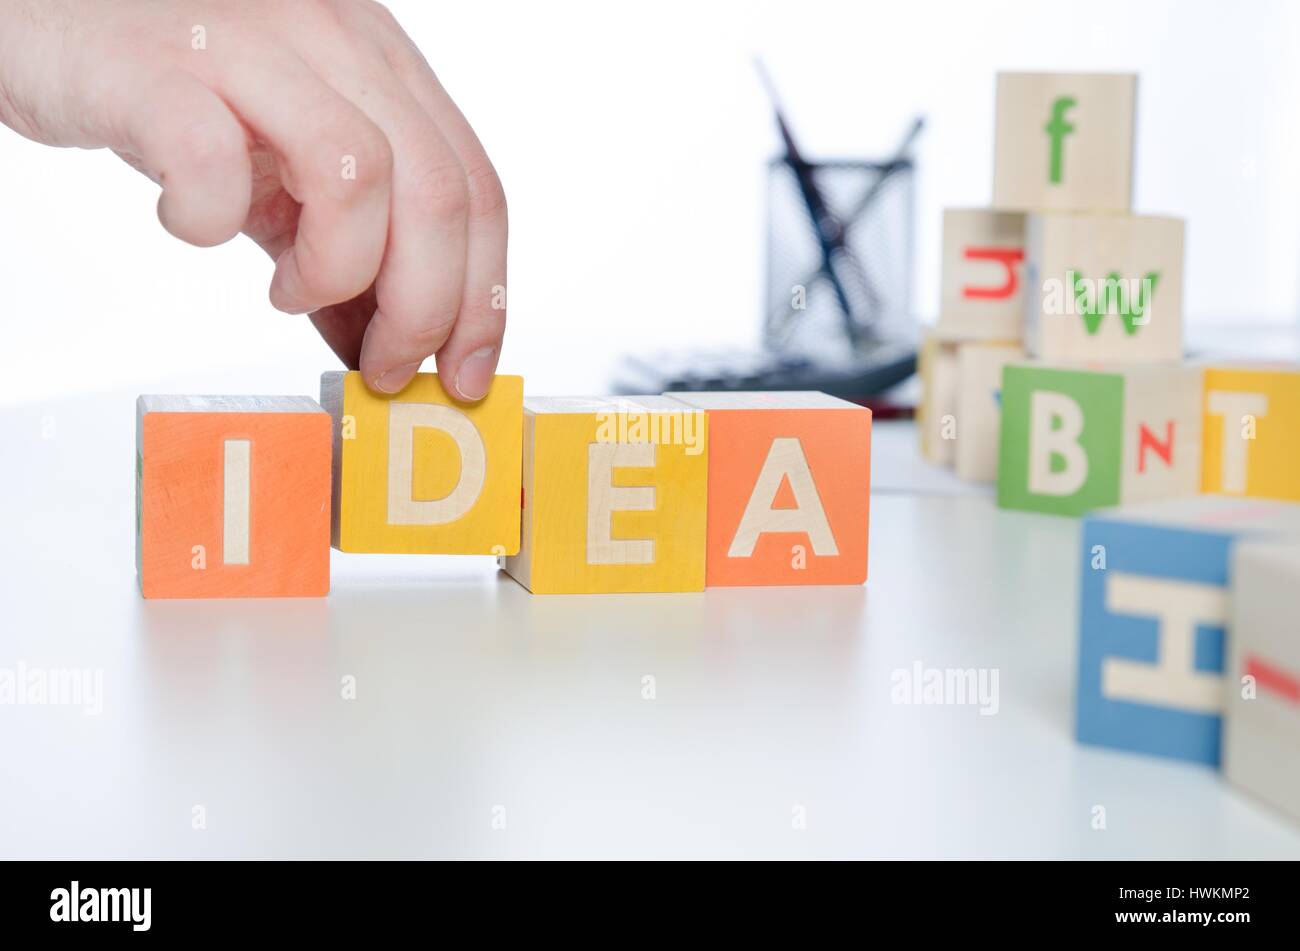 Idee-Wort mit bunten Blöcken. Idee Innovation Konzept Block Alphabet Plan Hand Geschäftskonzept Stockfoto